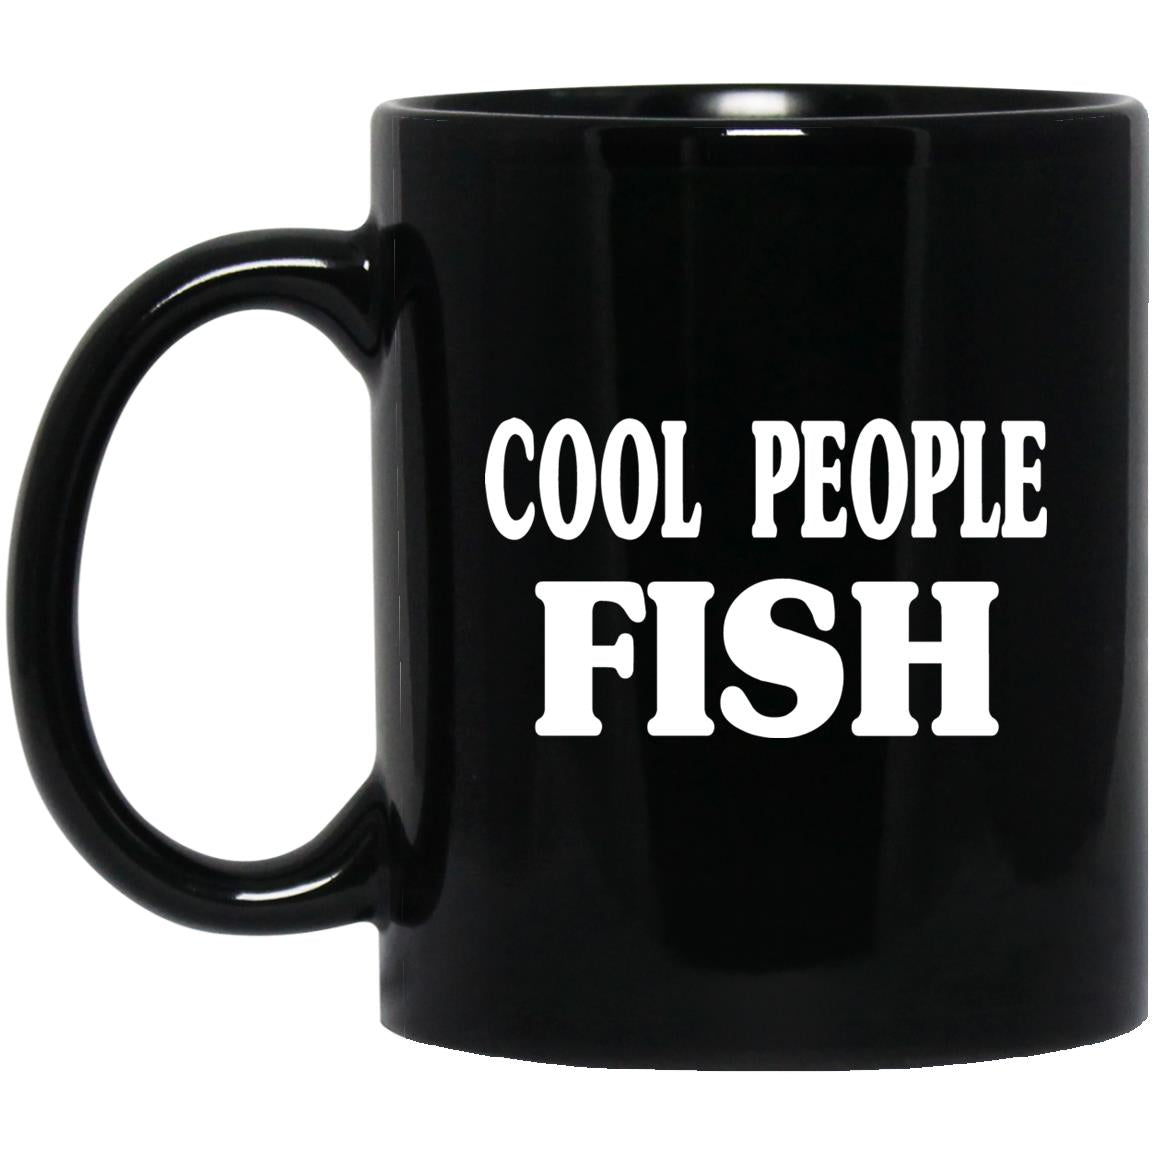 Cool people fish 11oz black mug